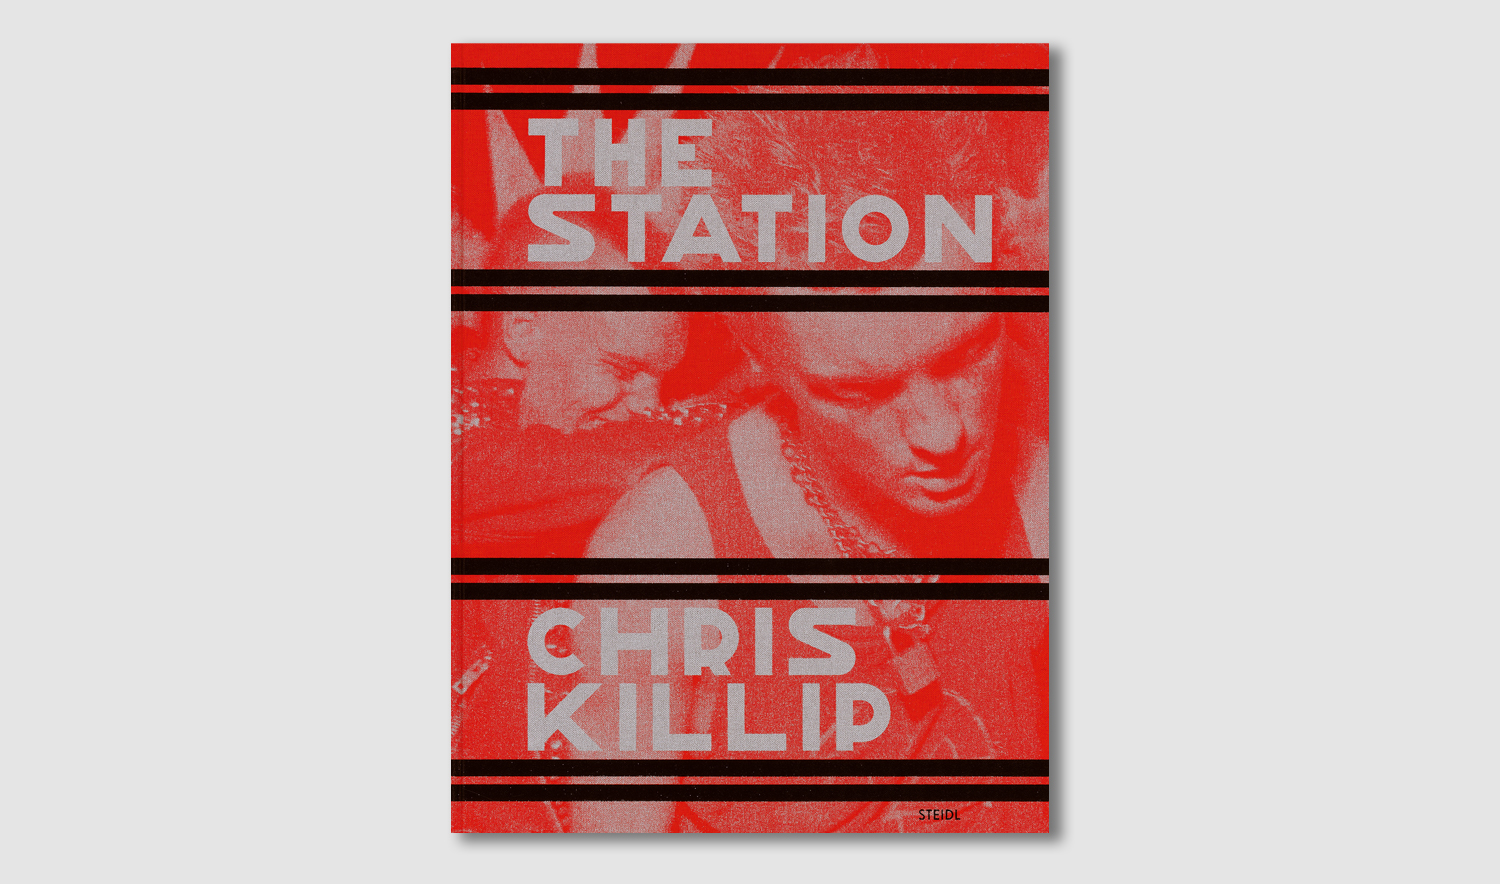 Chris Killip - The Station